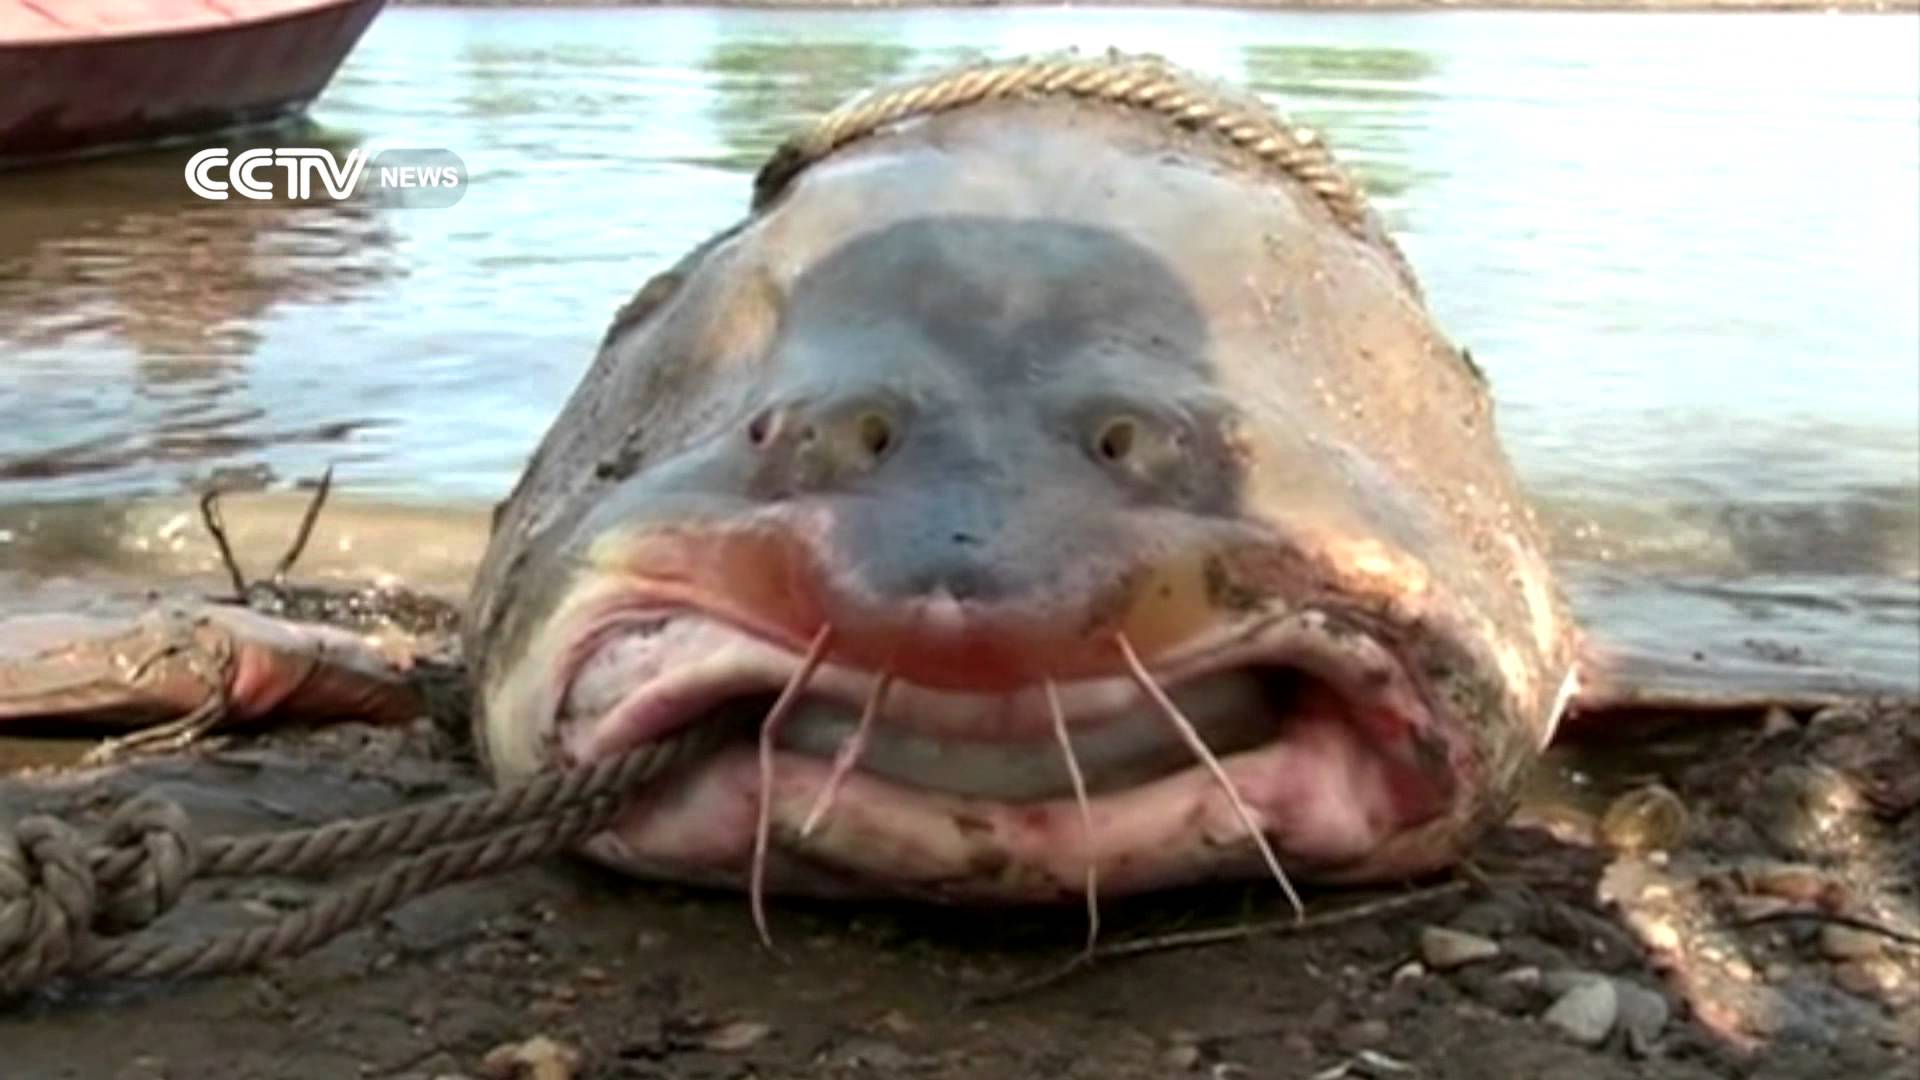 Fisherman catches rare, giant fish - YouTube